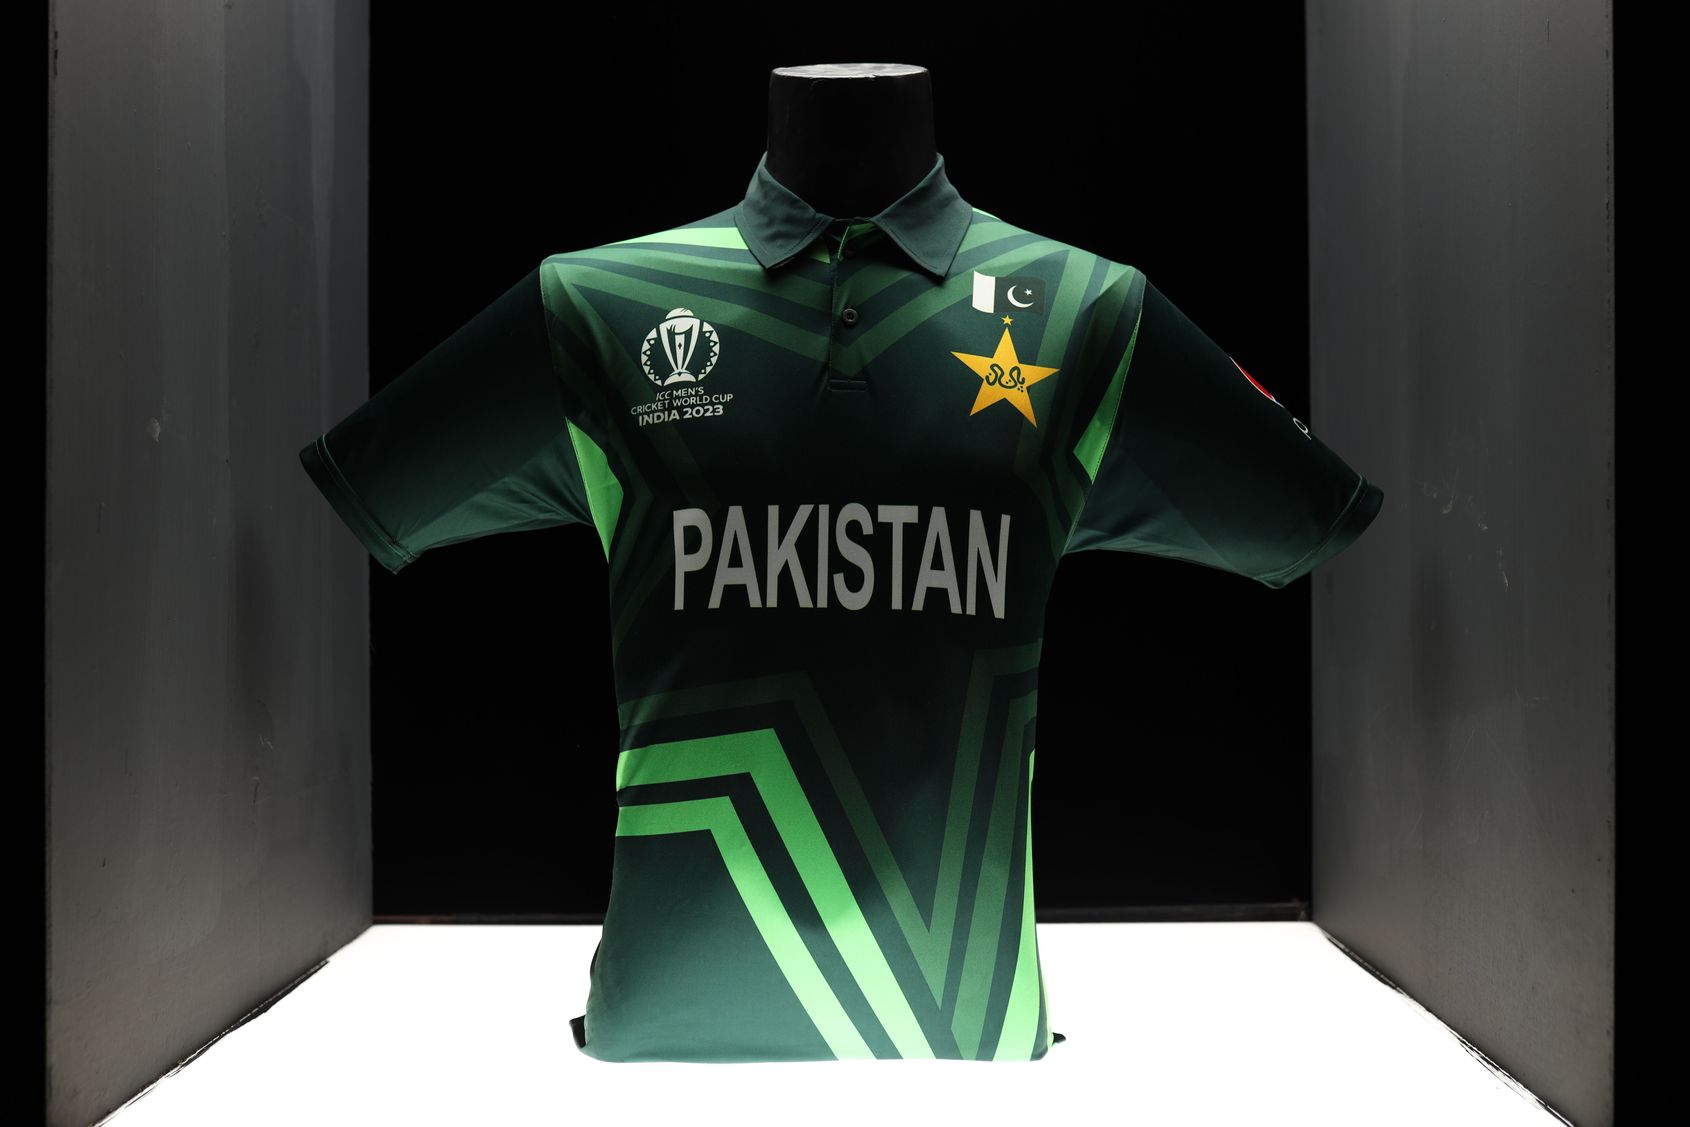 Pakistan jersey